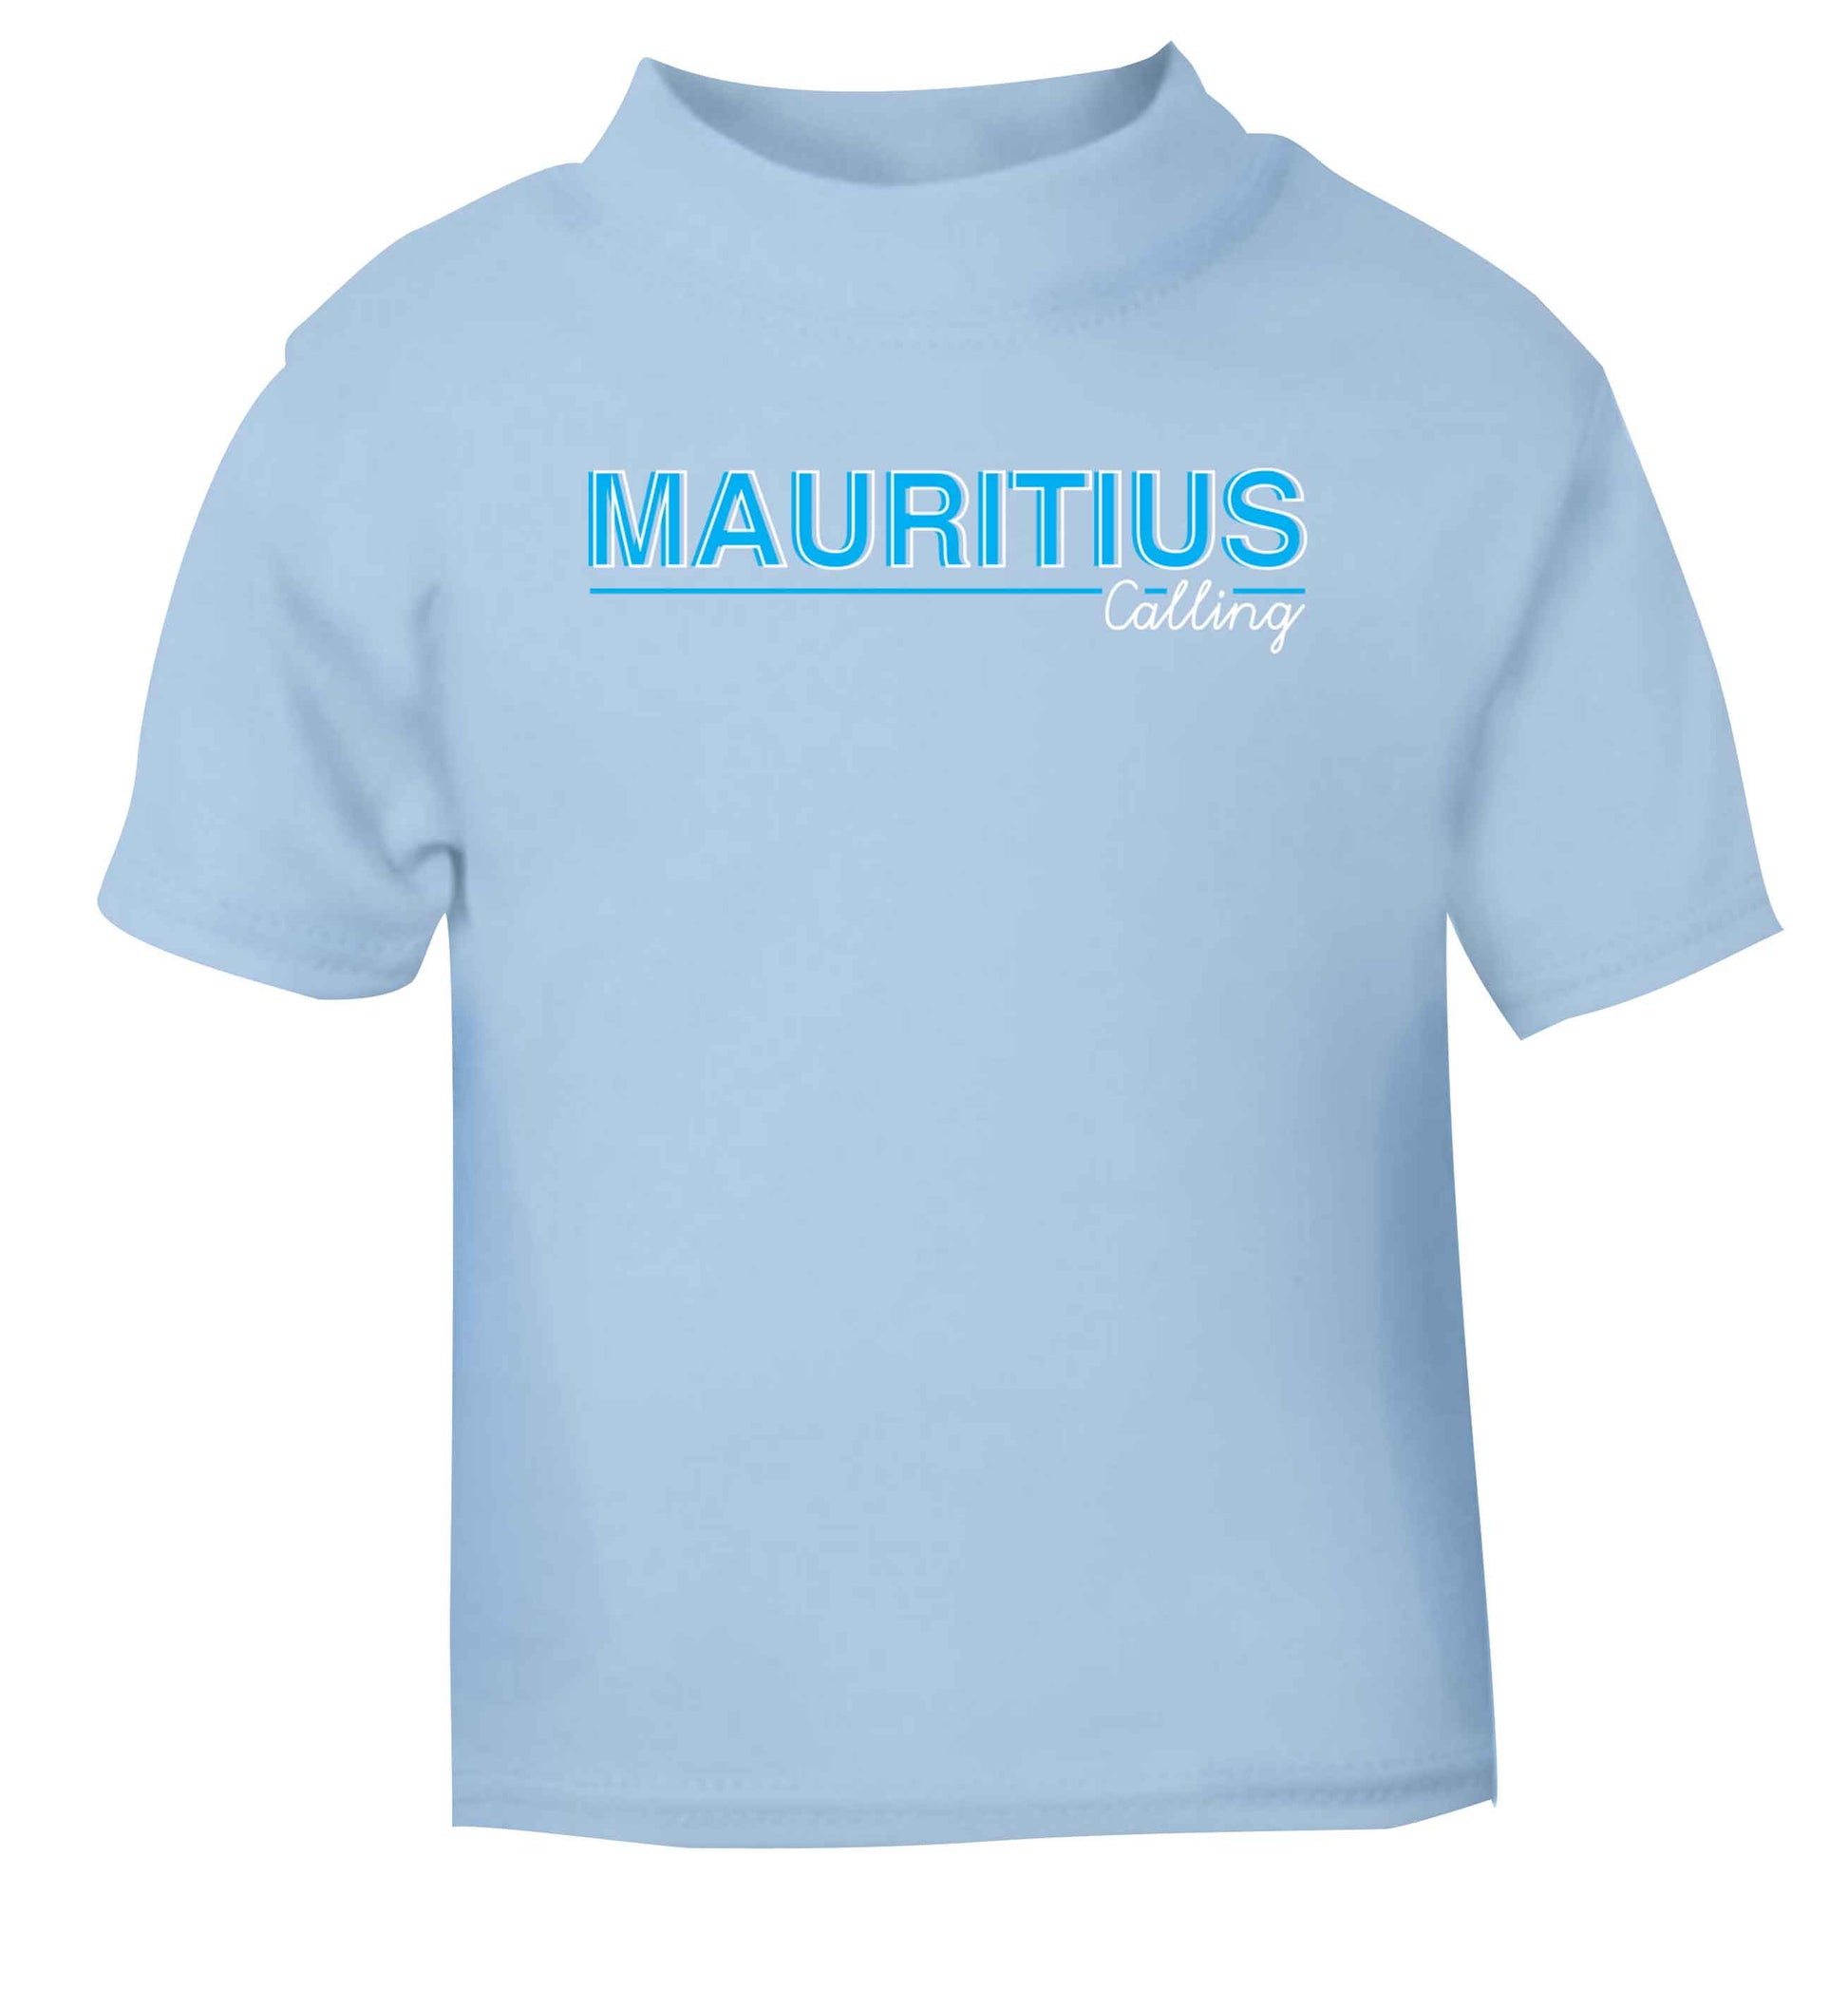 Mauritius calling light blue Baby Toddler Tshirt 2 Years